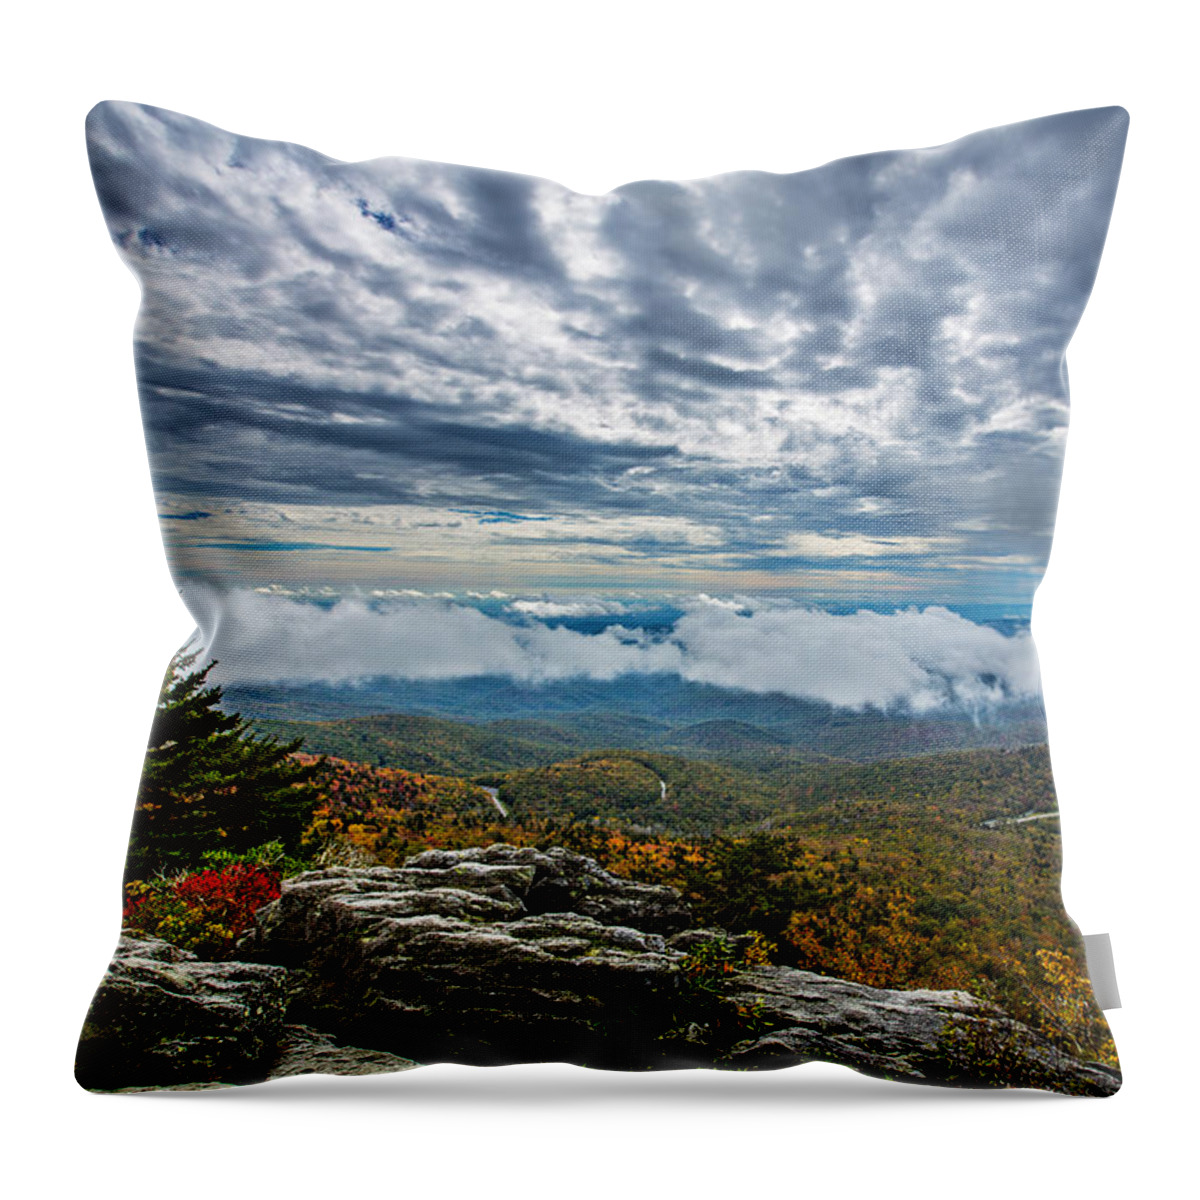 Grandfather Mountain Throw Pillow featuring the photograph Grandfather Mountain by John Haldane